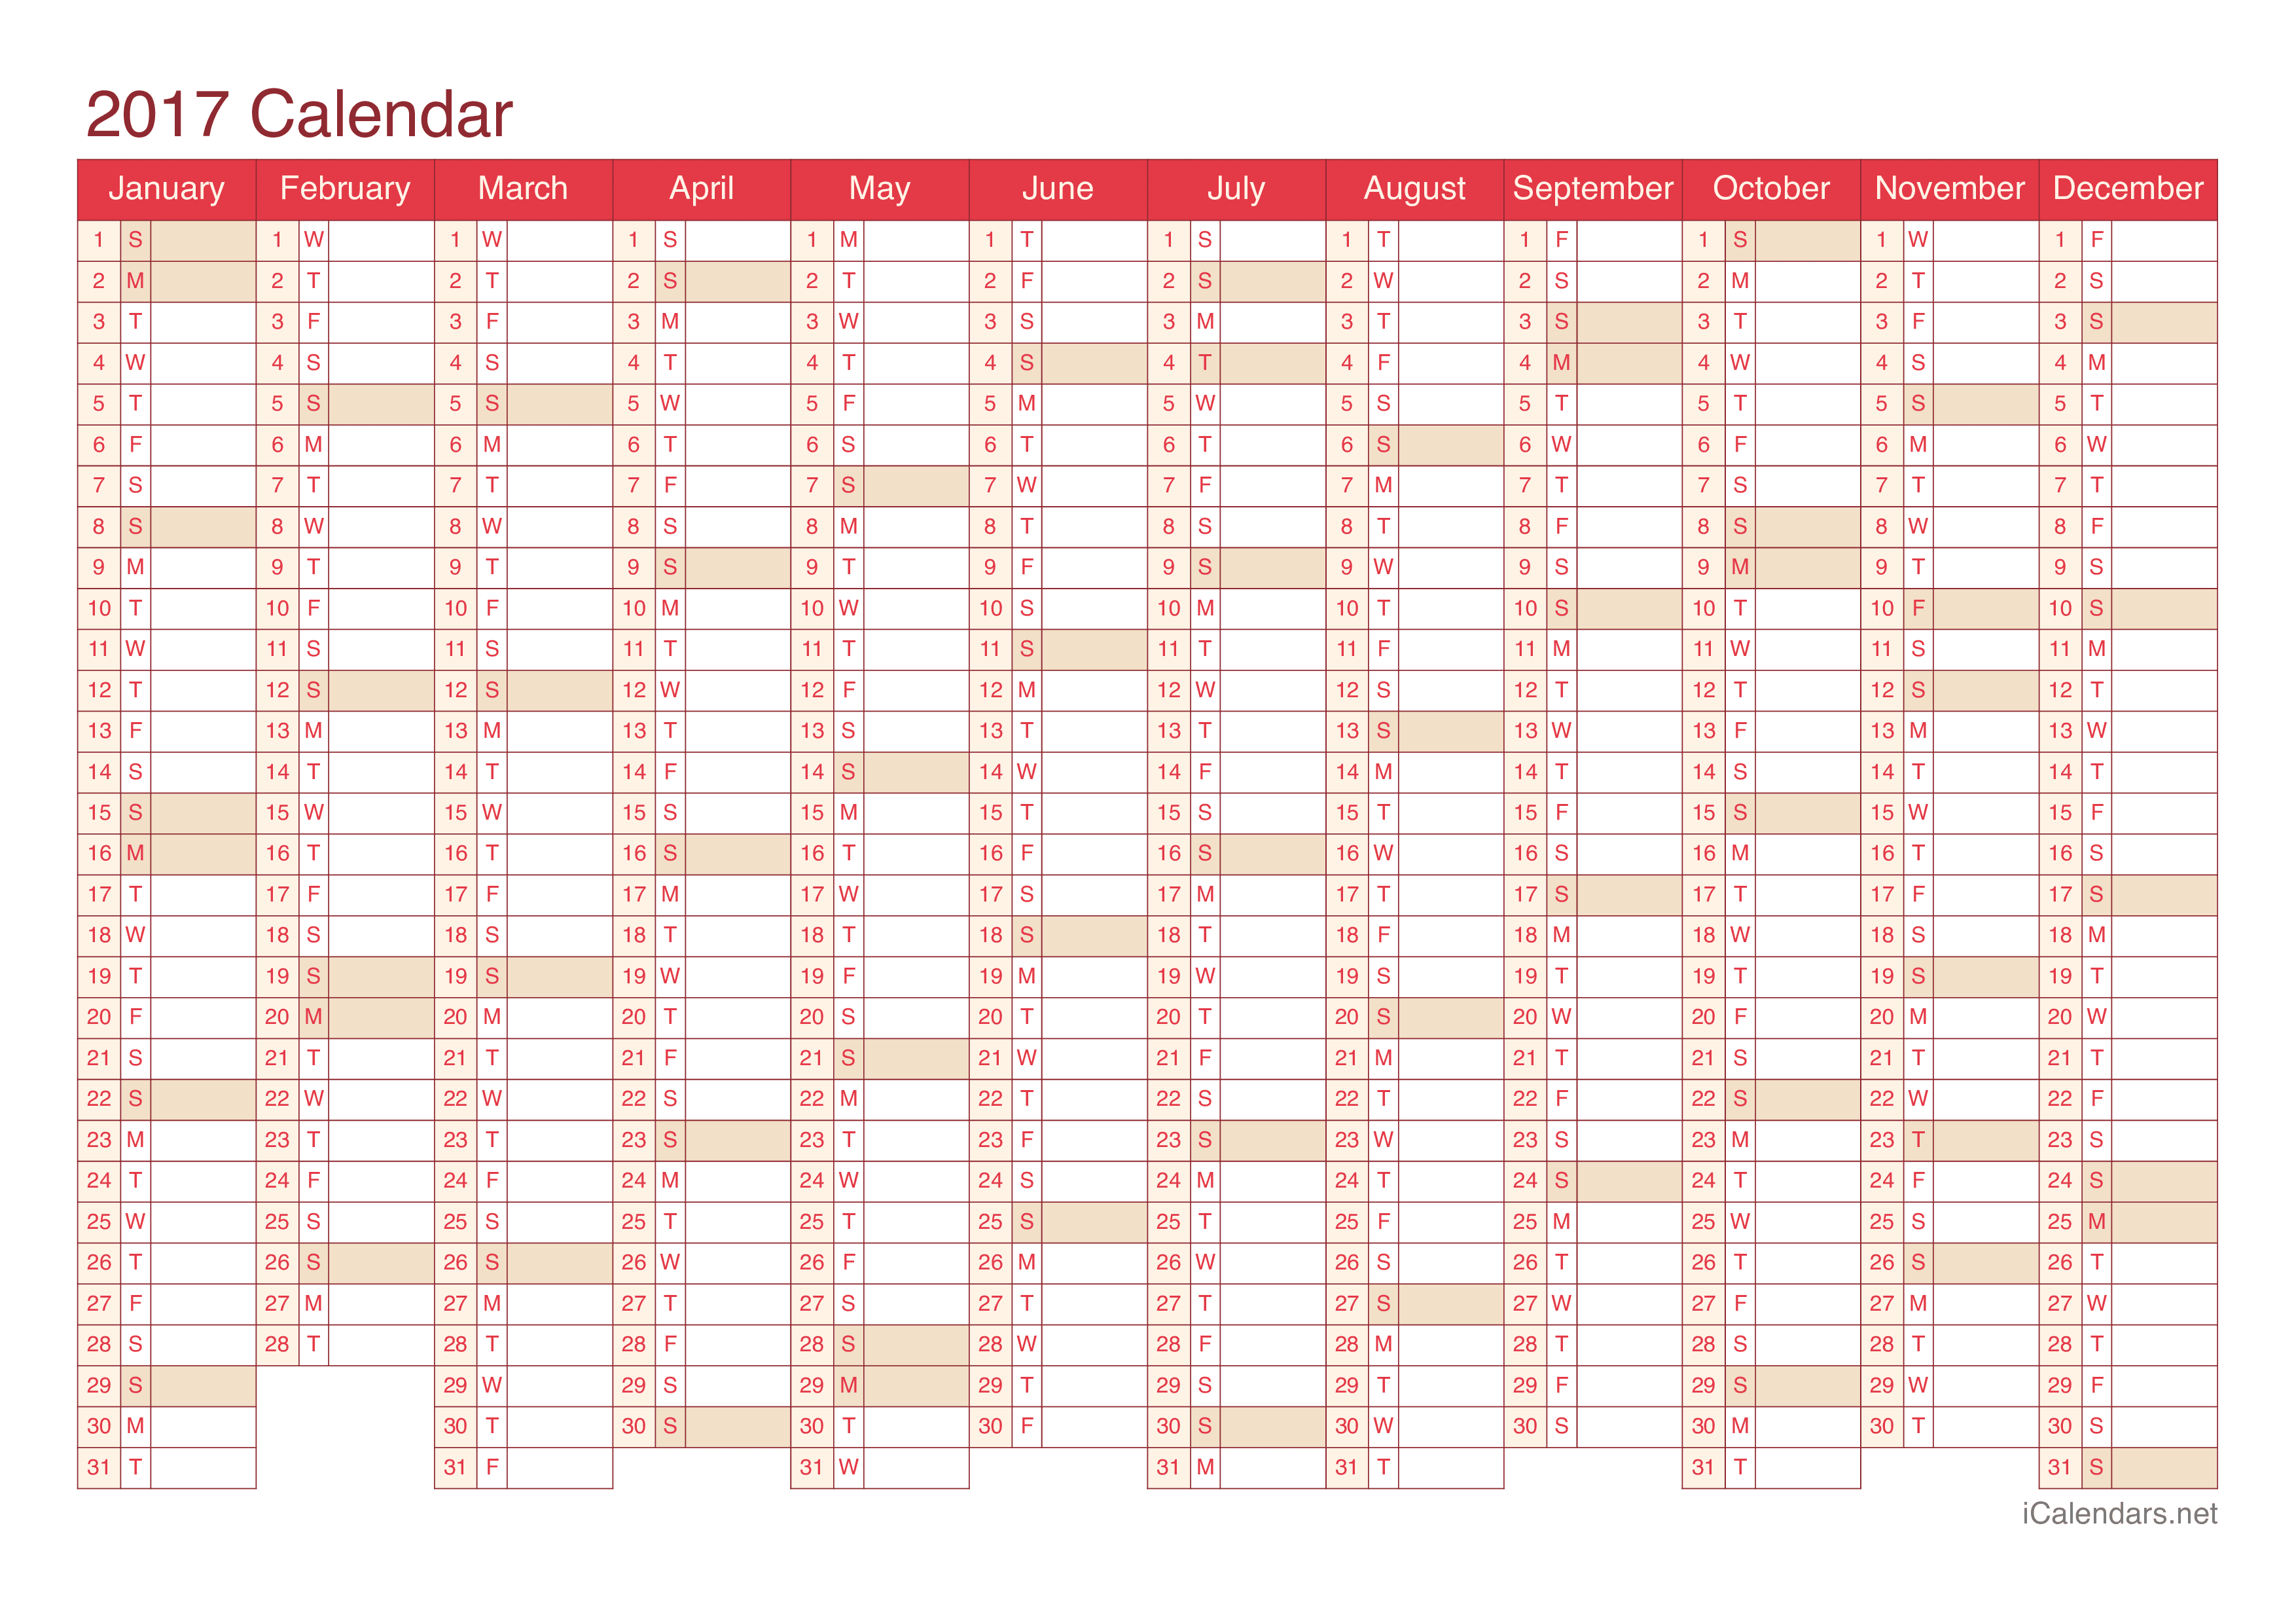 2017 Calendar - Cherry